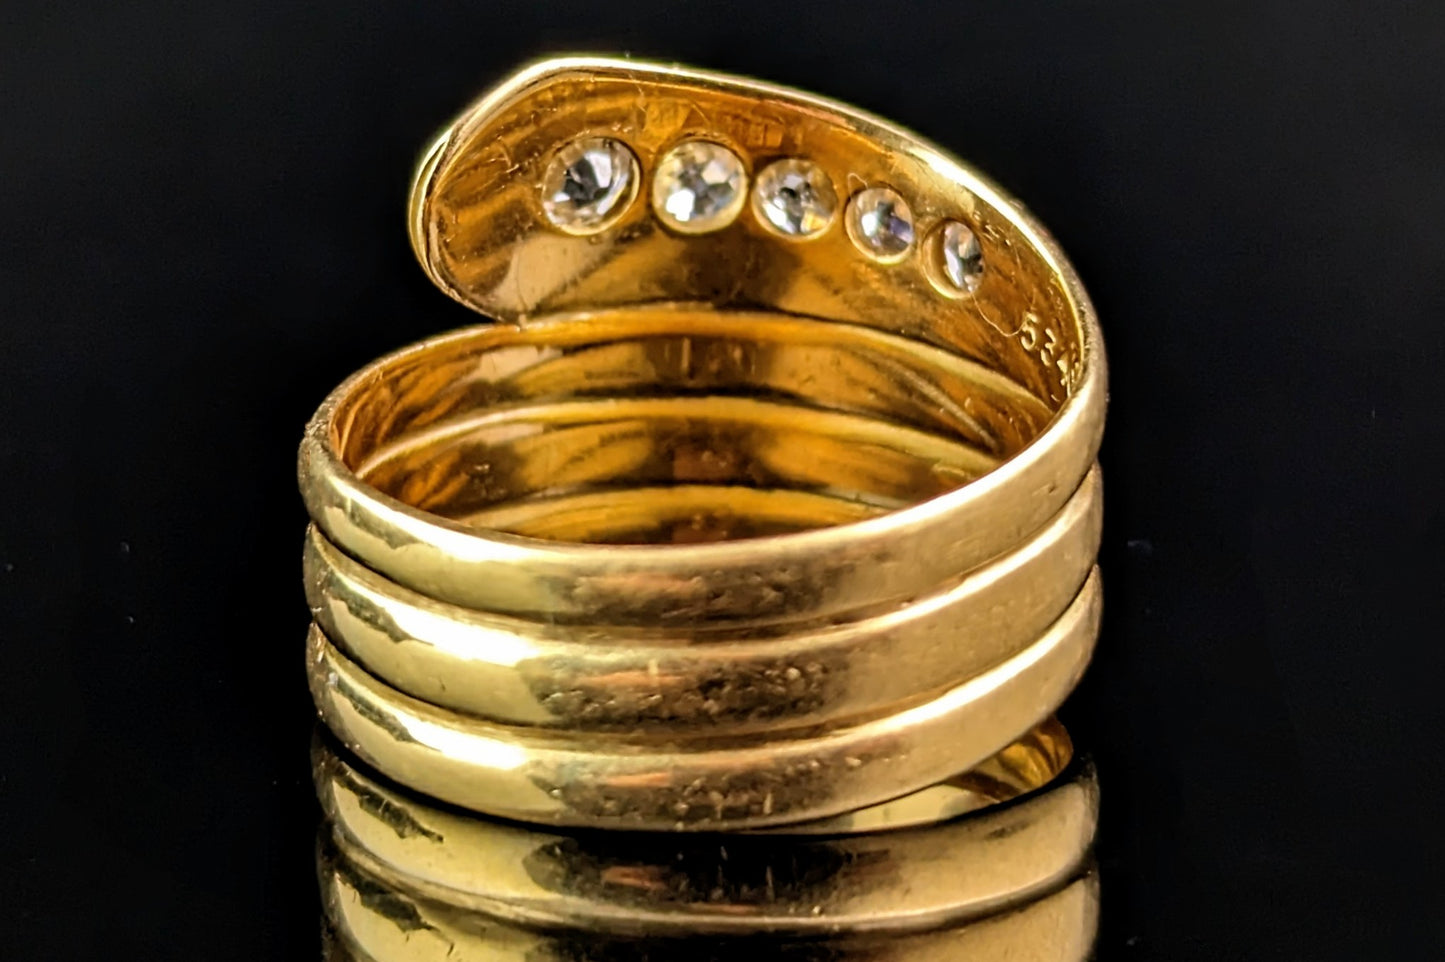 Antique Diamond snake ring, 18ct yellow gold, Ruby eyes